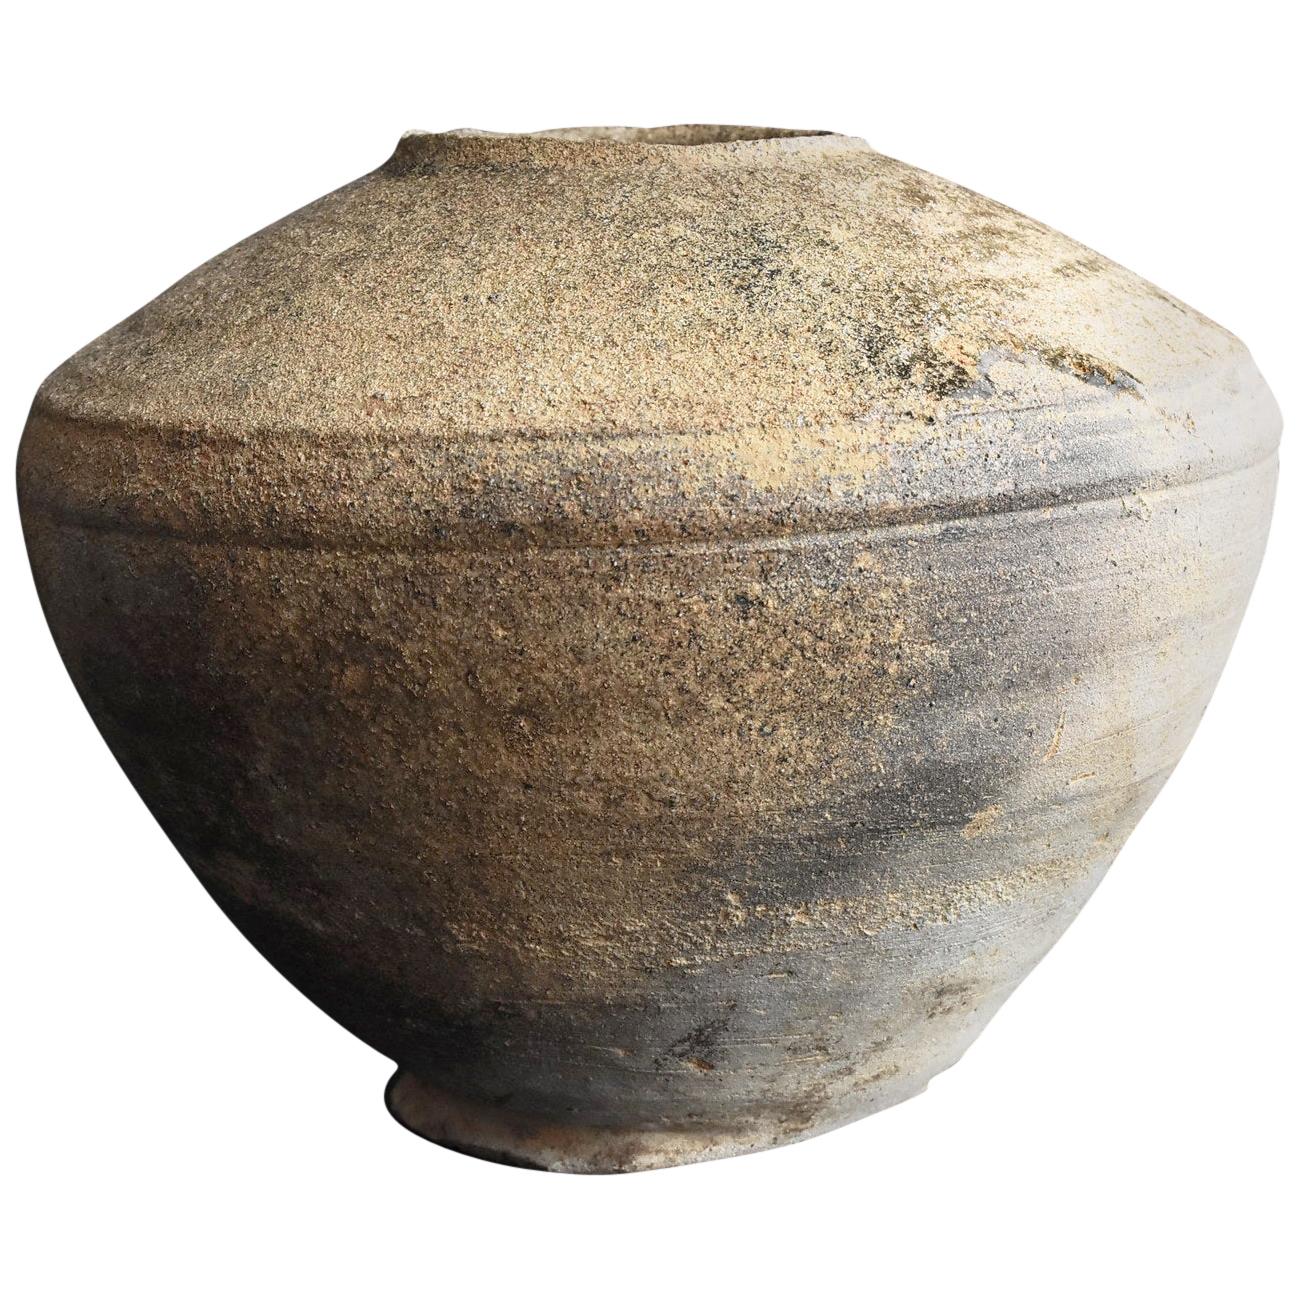 Japanese Antique Pottery 900s-1300s Heian-Kamakura Period "Sueki" Jar / Vase